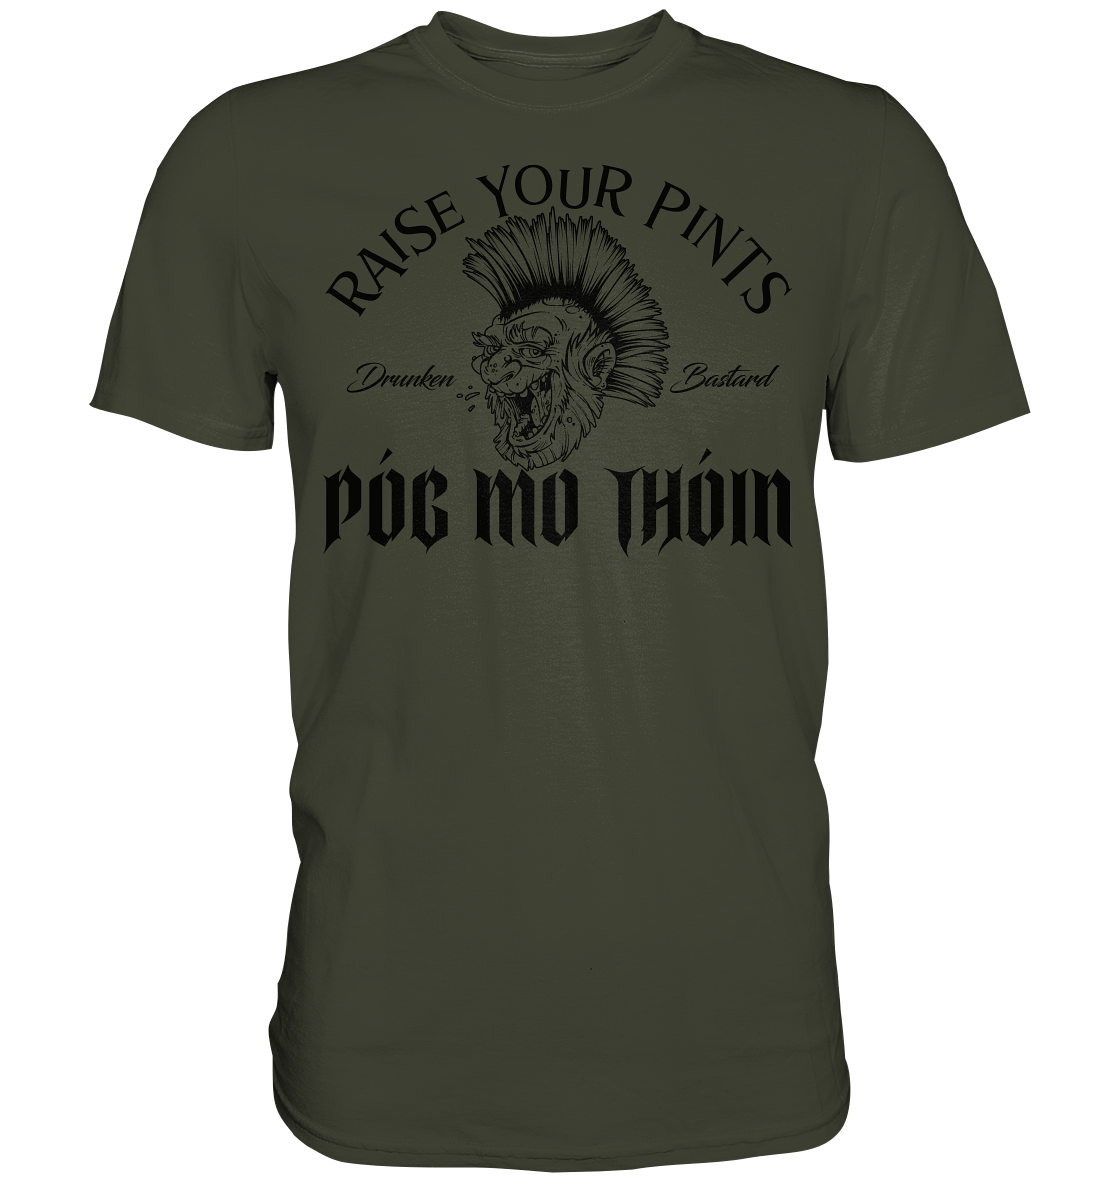 Póg Mo Thóin Streetwear "Drunken Bastard" - Premium Shirt